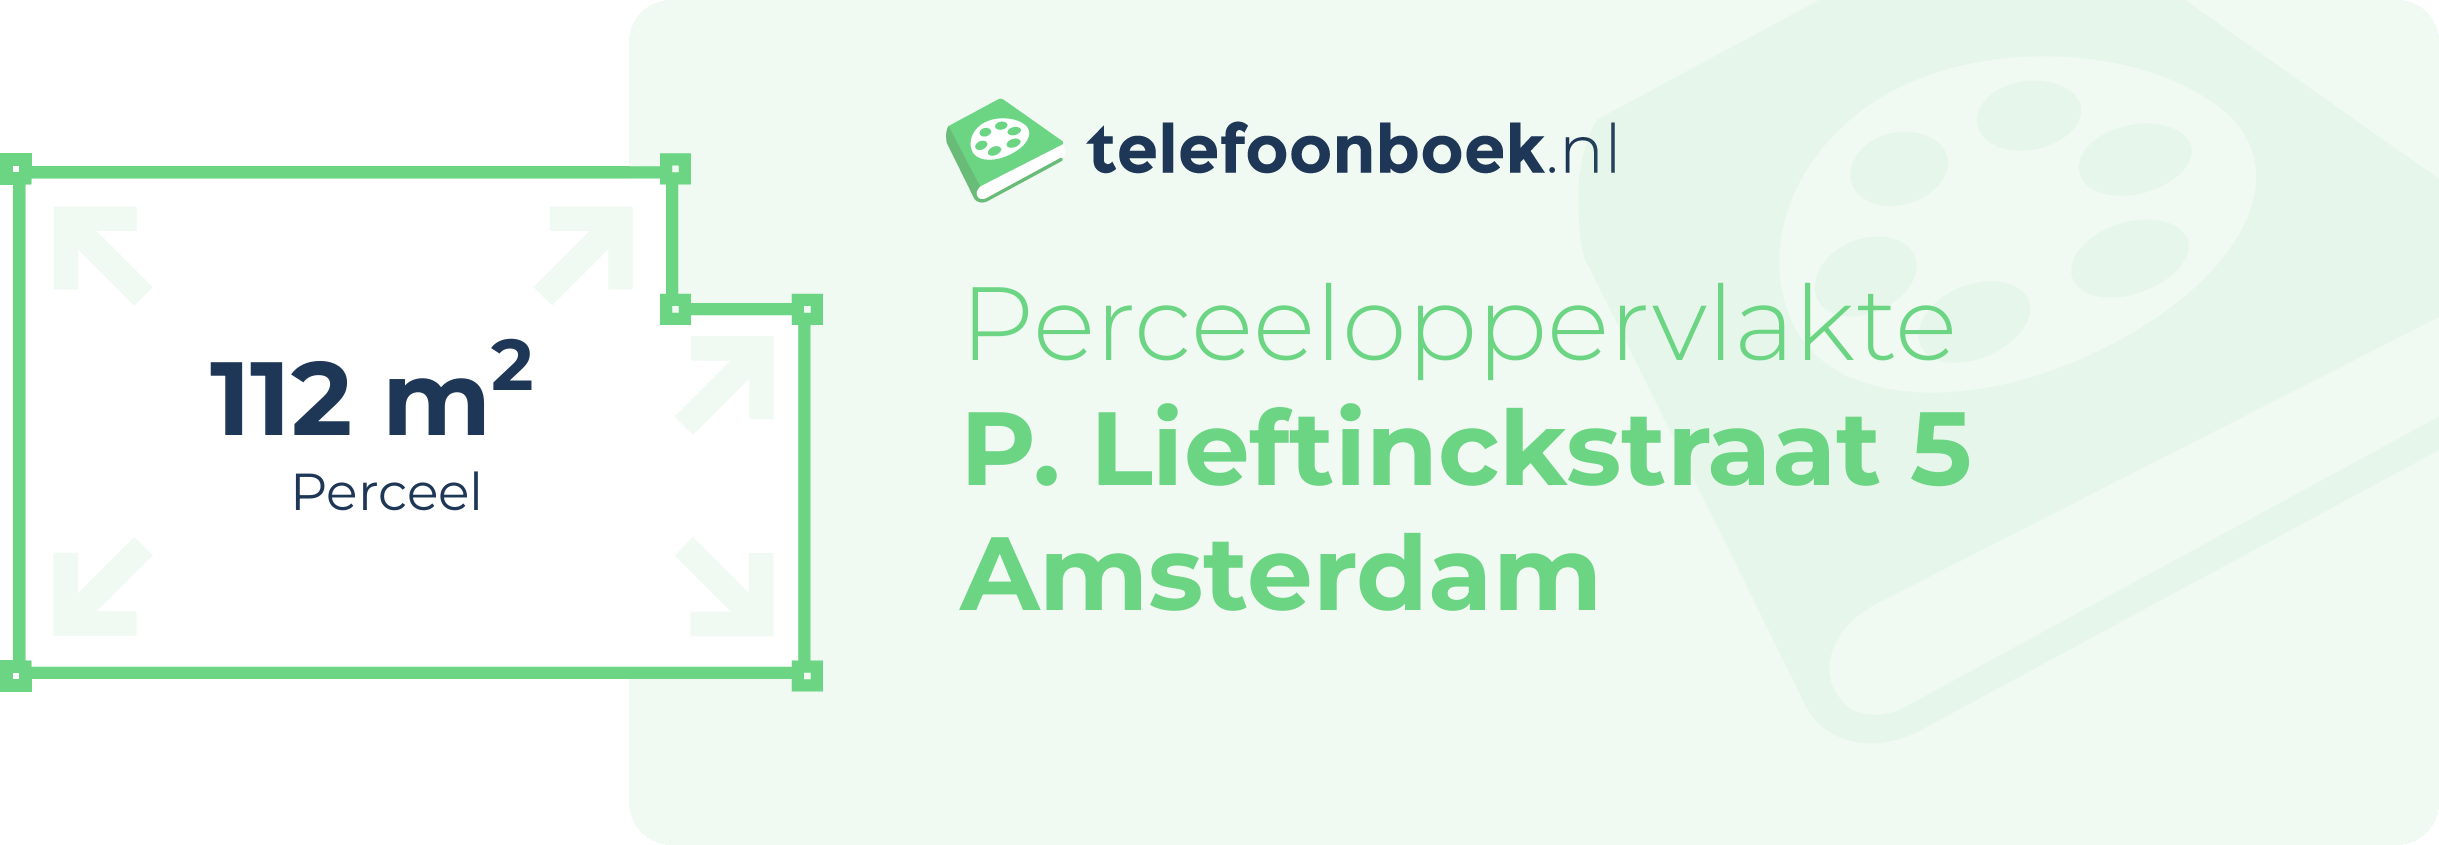 Perceeloppervlakte P. Lieftinckstraat 5 Amsterdam